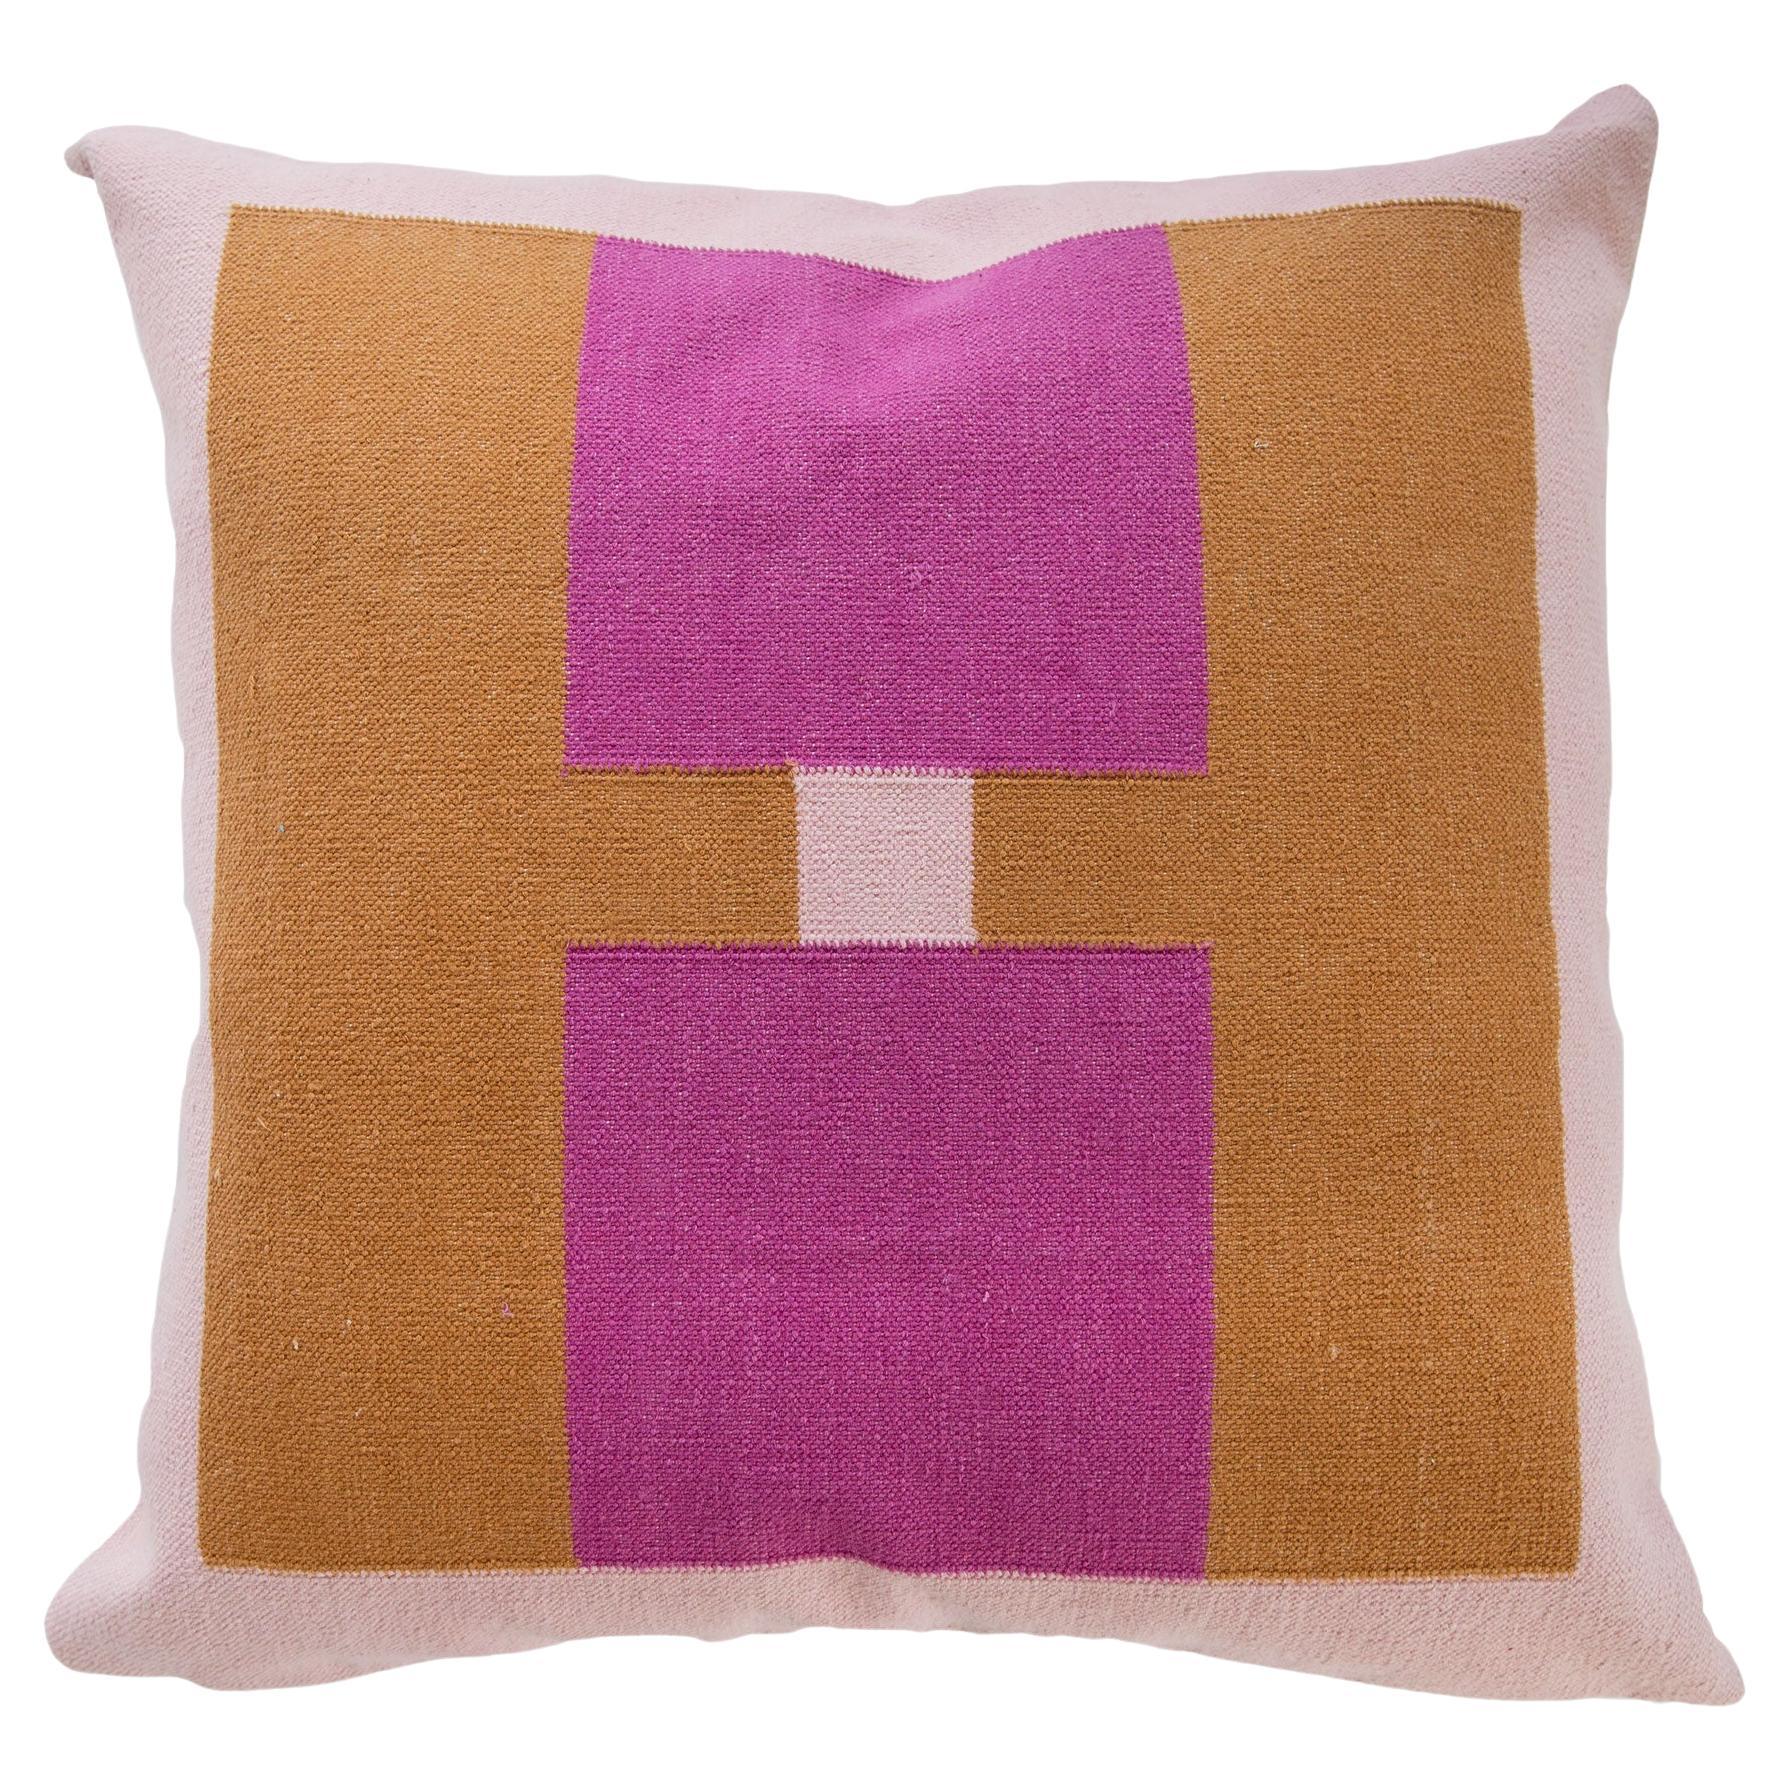 Barcelona Colorblock Pillow - Pink